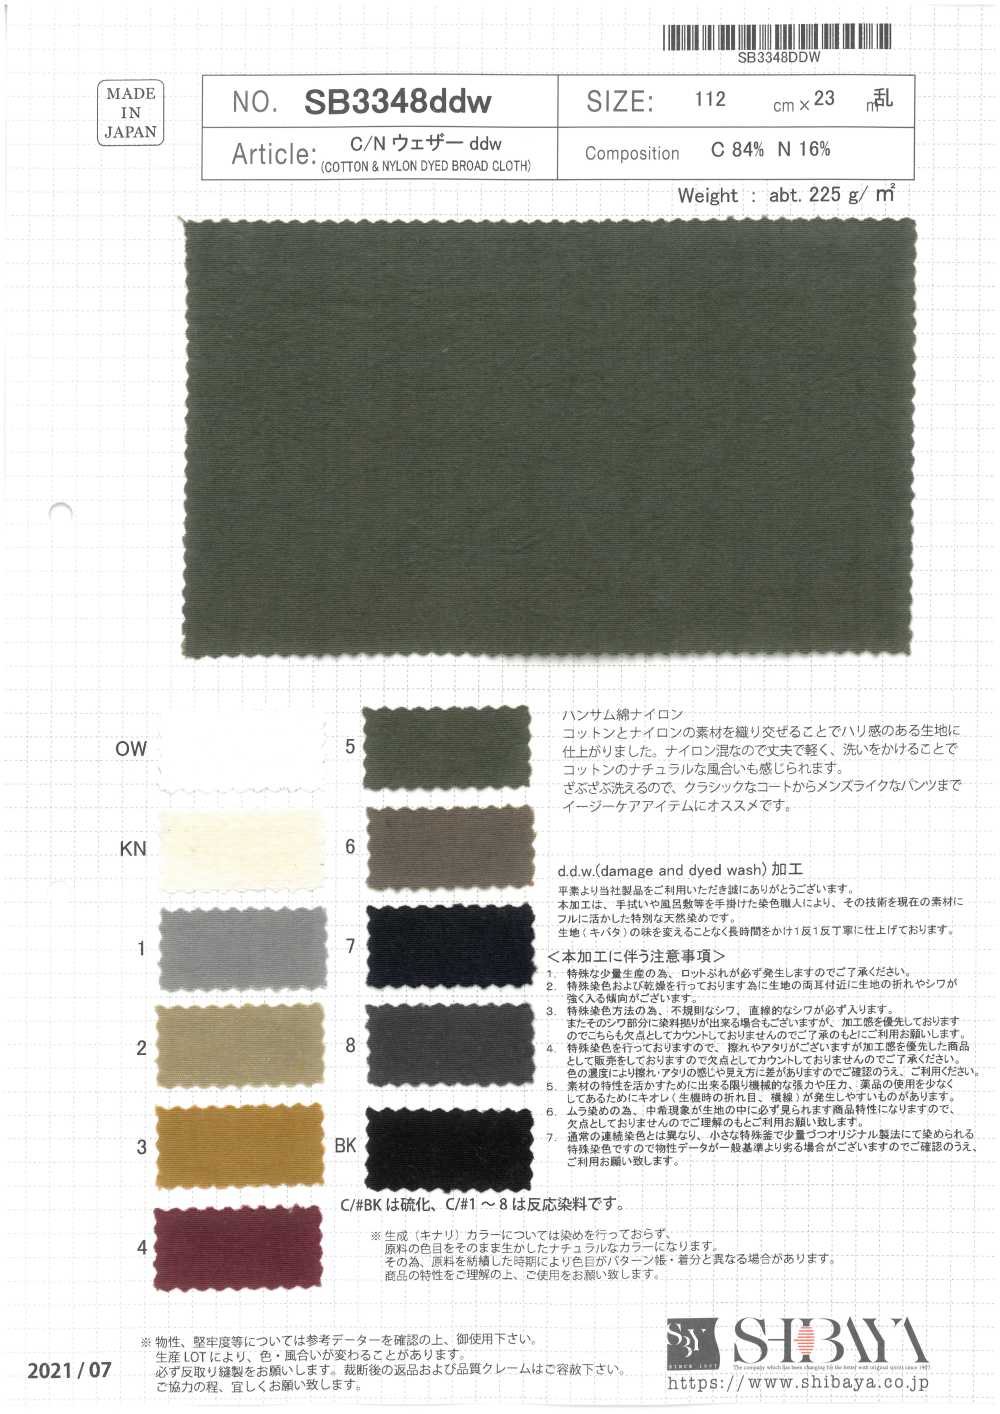 SB3348ddw Tela Impermeable De Algodón / Nailon Ddw[Fabrica Textil] SHIBAYA